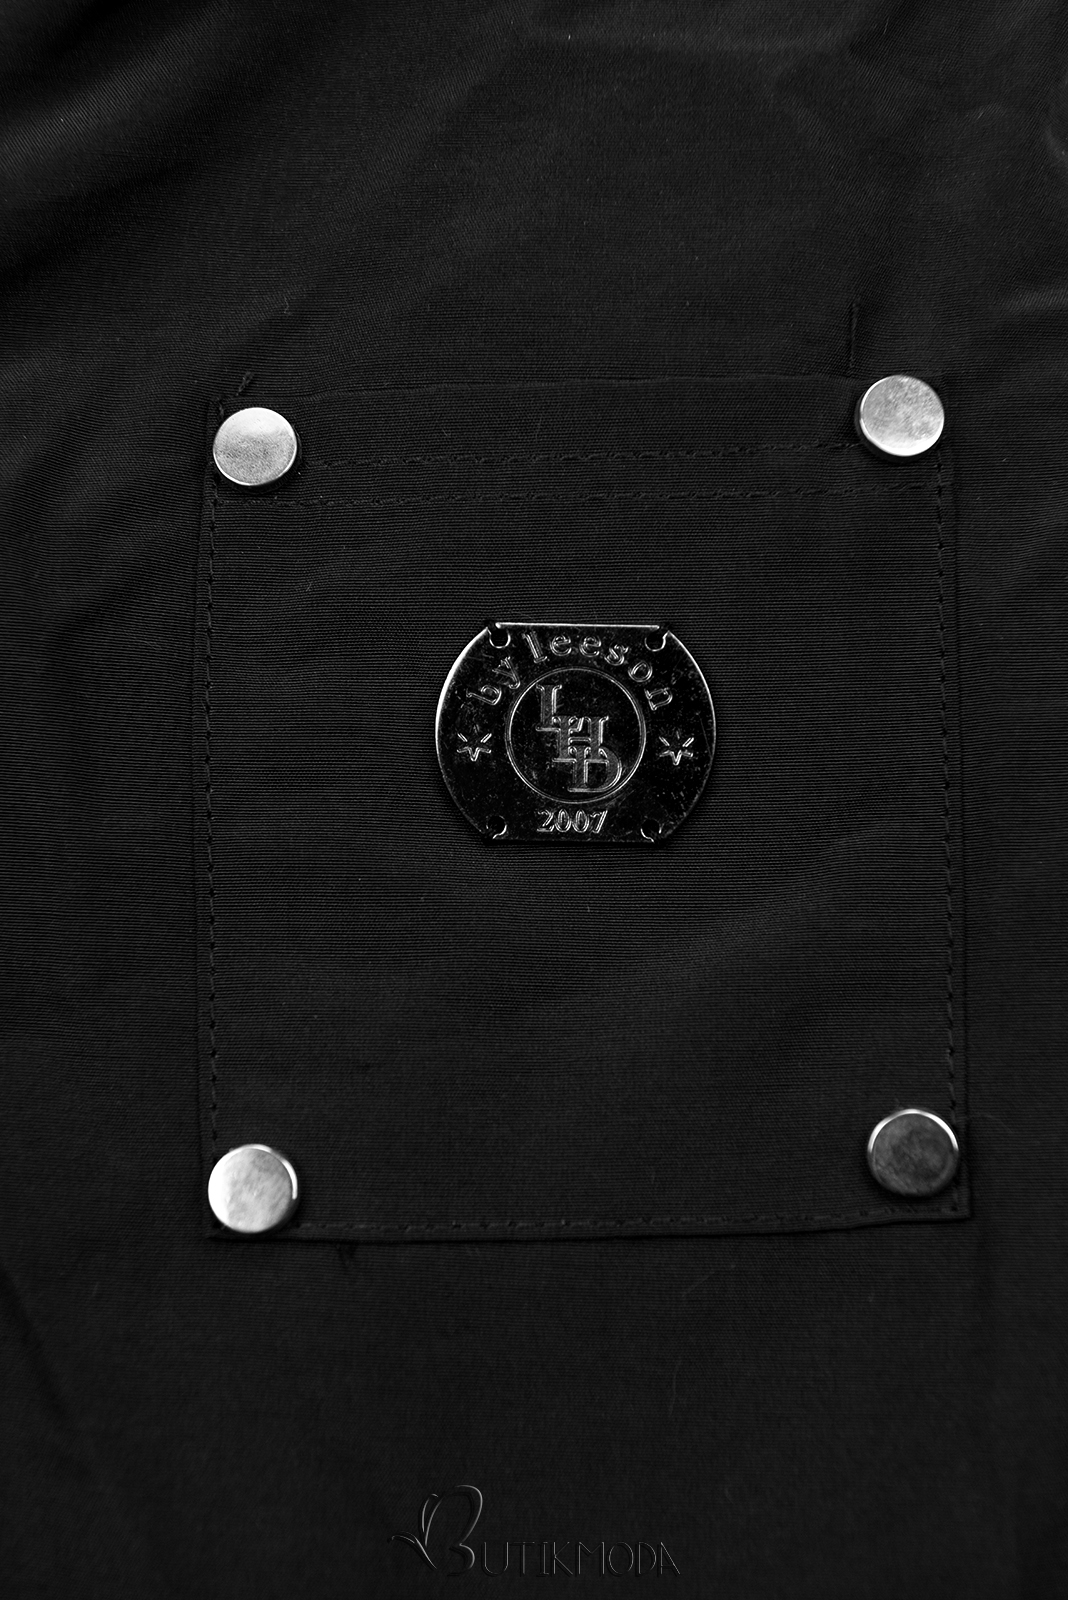 Winter parka jacket in black